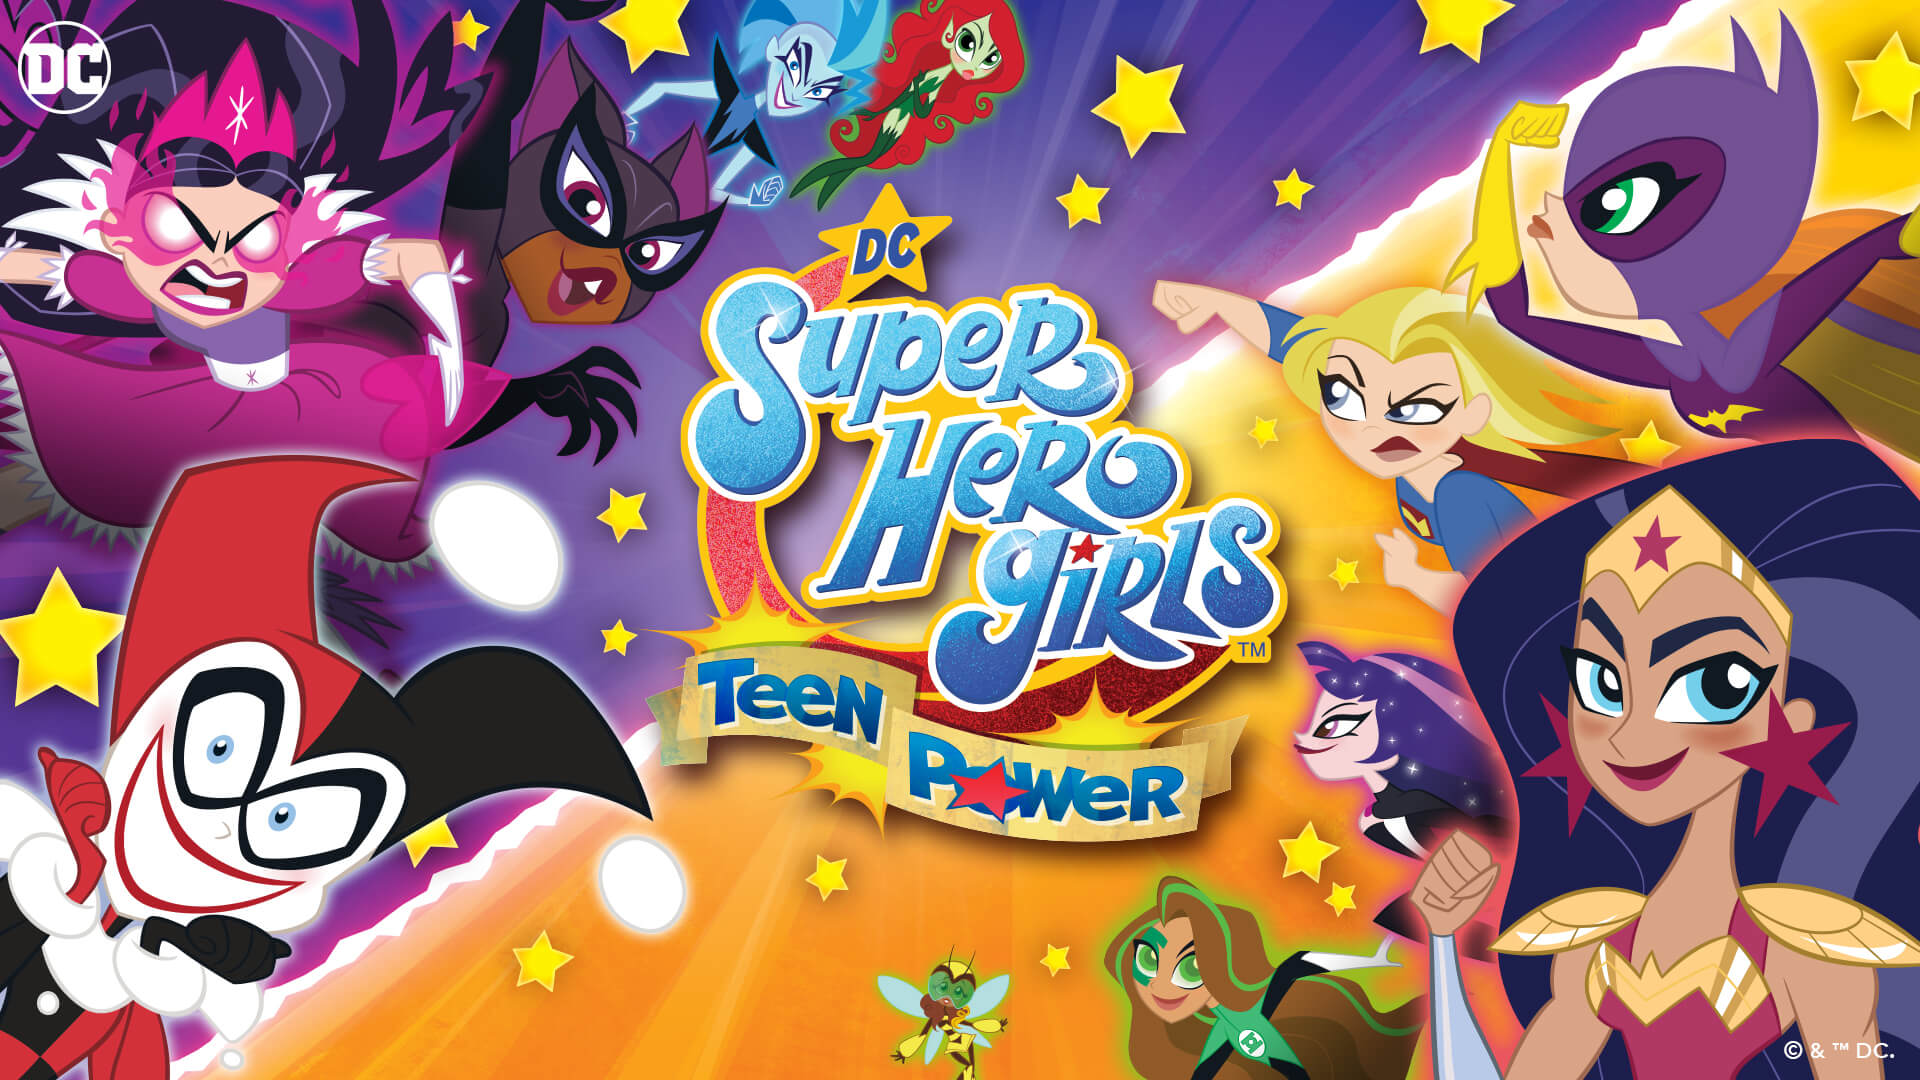 DC Super Hero Girls: Teen Power Free PC Download